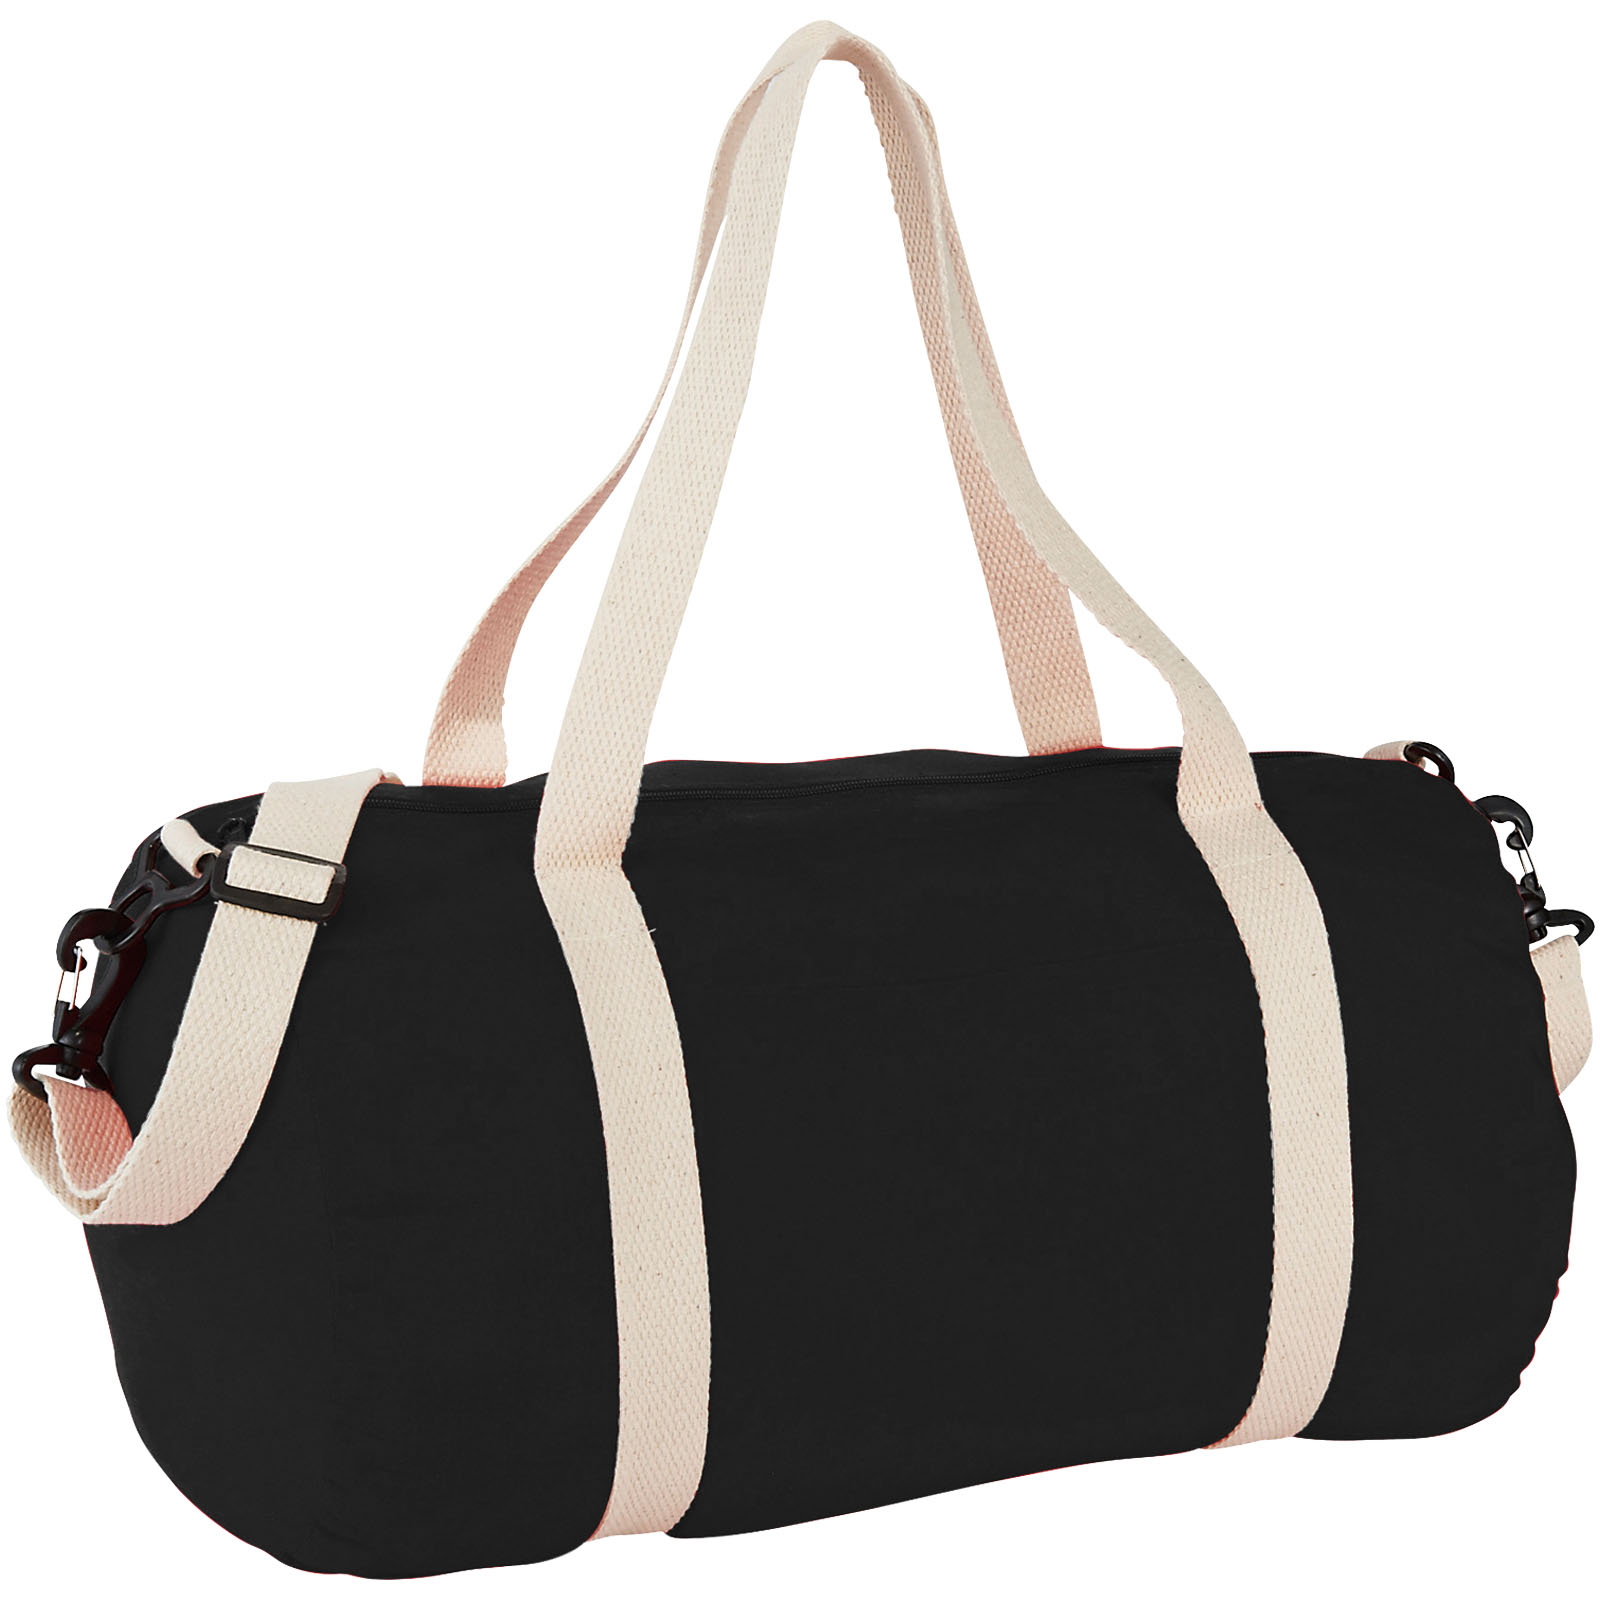 Travel bags - Cochichuate cotton barrel duffel bag 25L